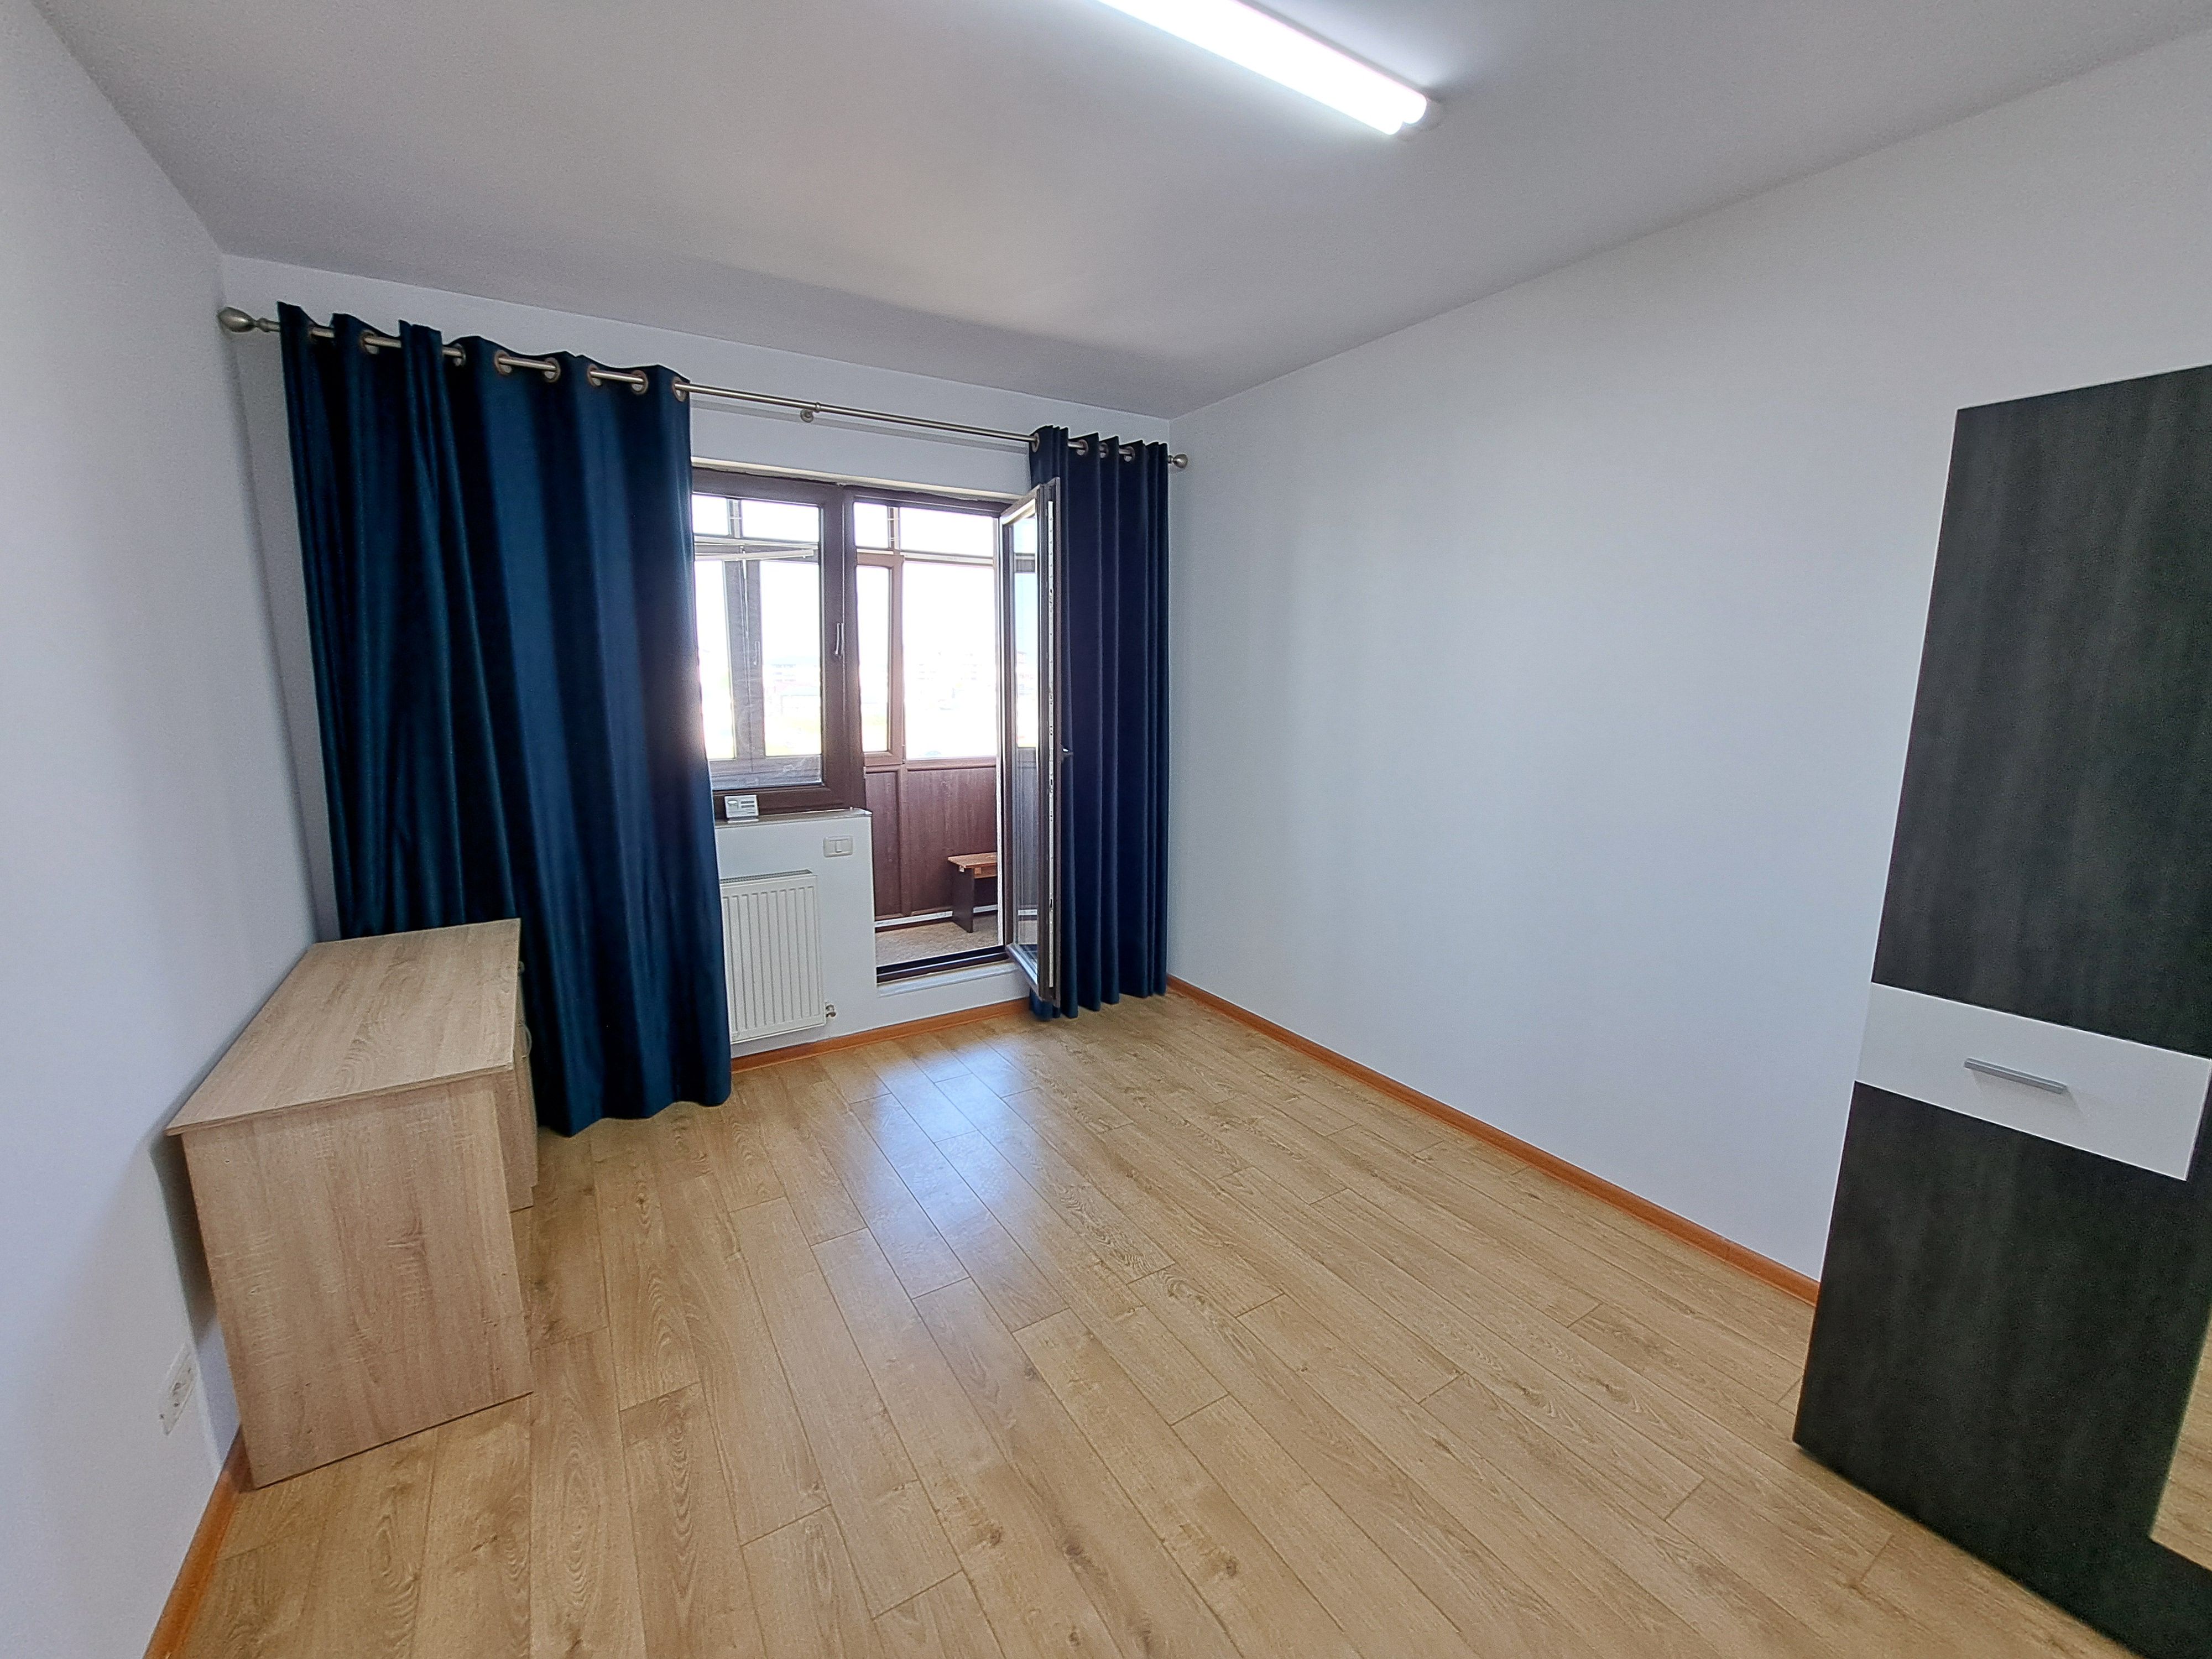 Apartament cu 2 camere 61,59 mp + loc de parcare - Fundeni